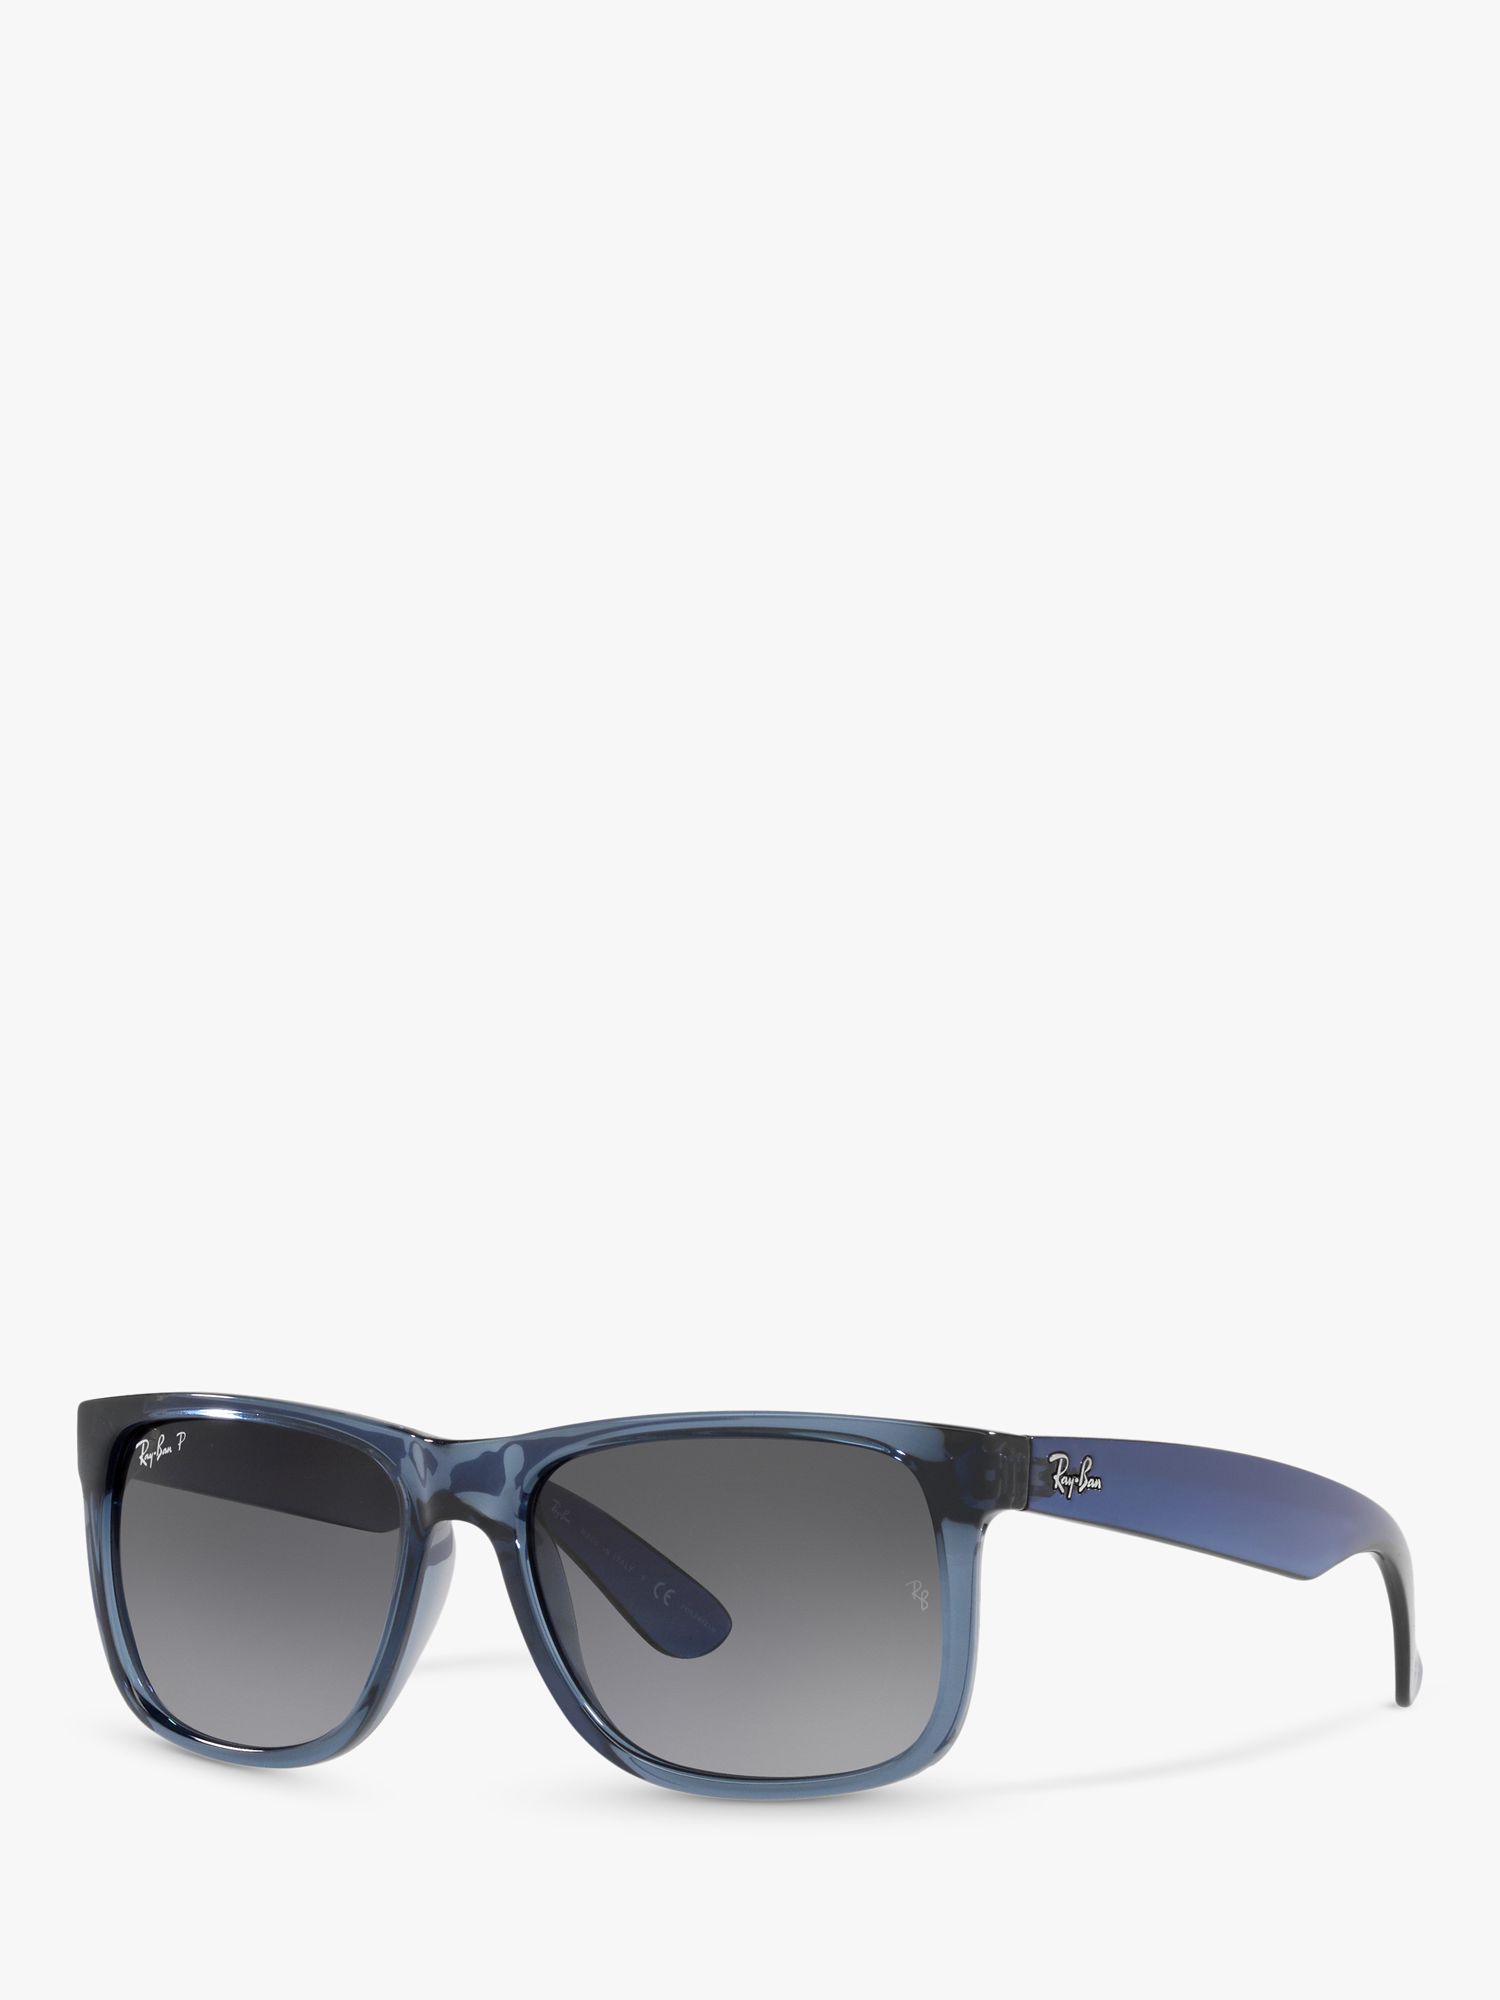 Ray-Ban RB4165 Men's Polarised Justin Square Sunglasses